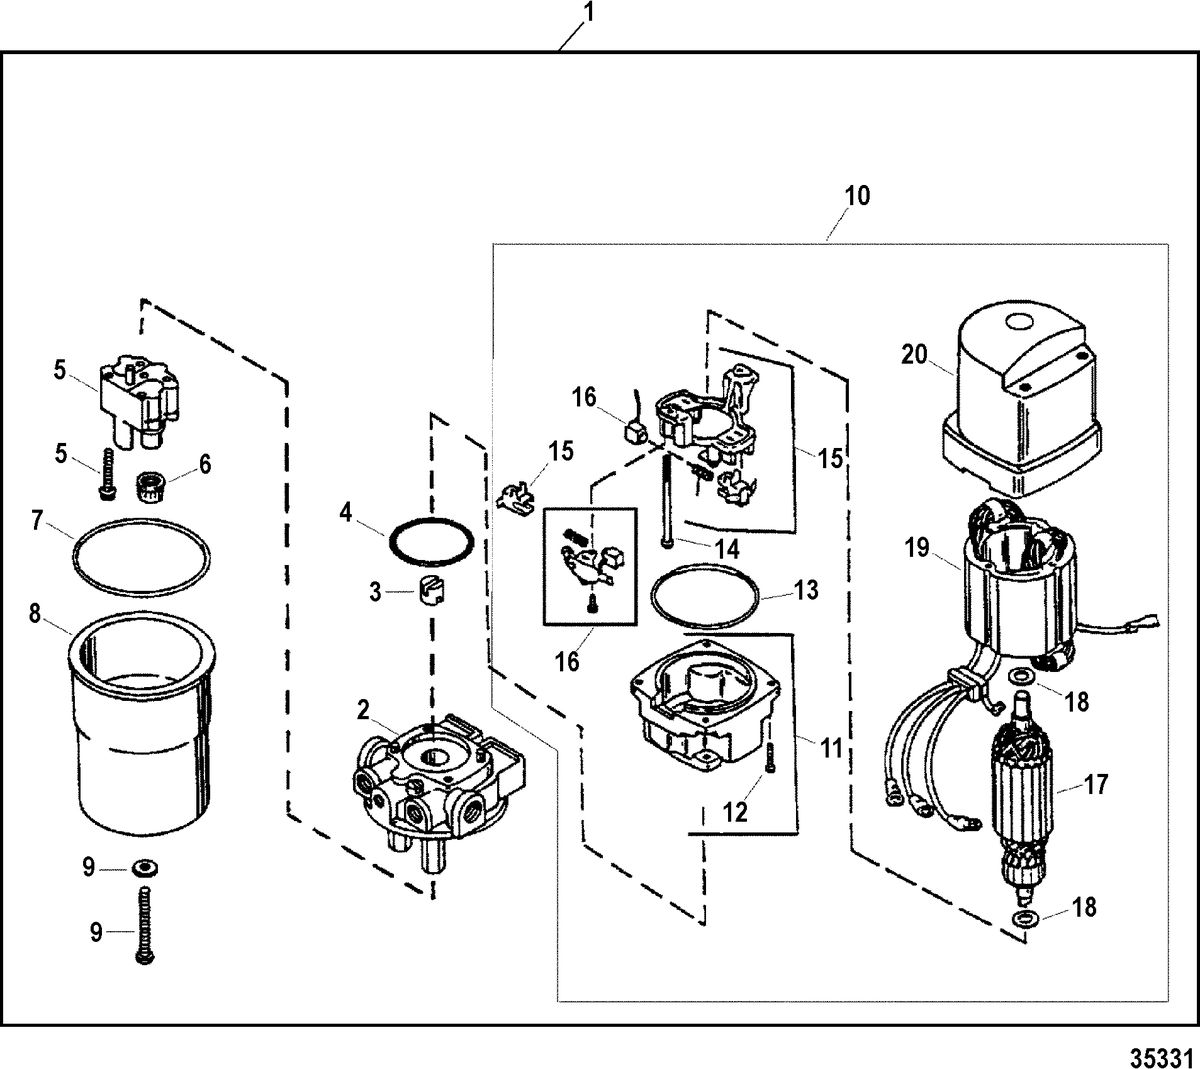 RACE STERNDRIVE SSM/DRY SUMP DRIVES AND TRANSOMS Trim Pump Components(Design I - 846859A1)